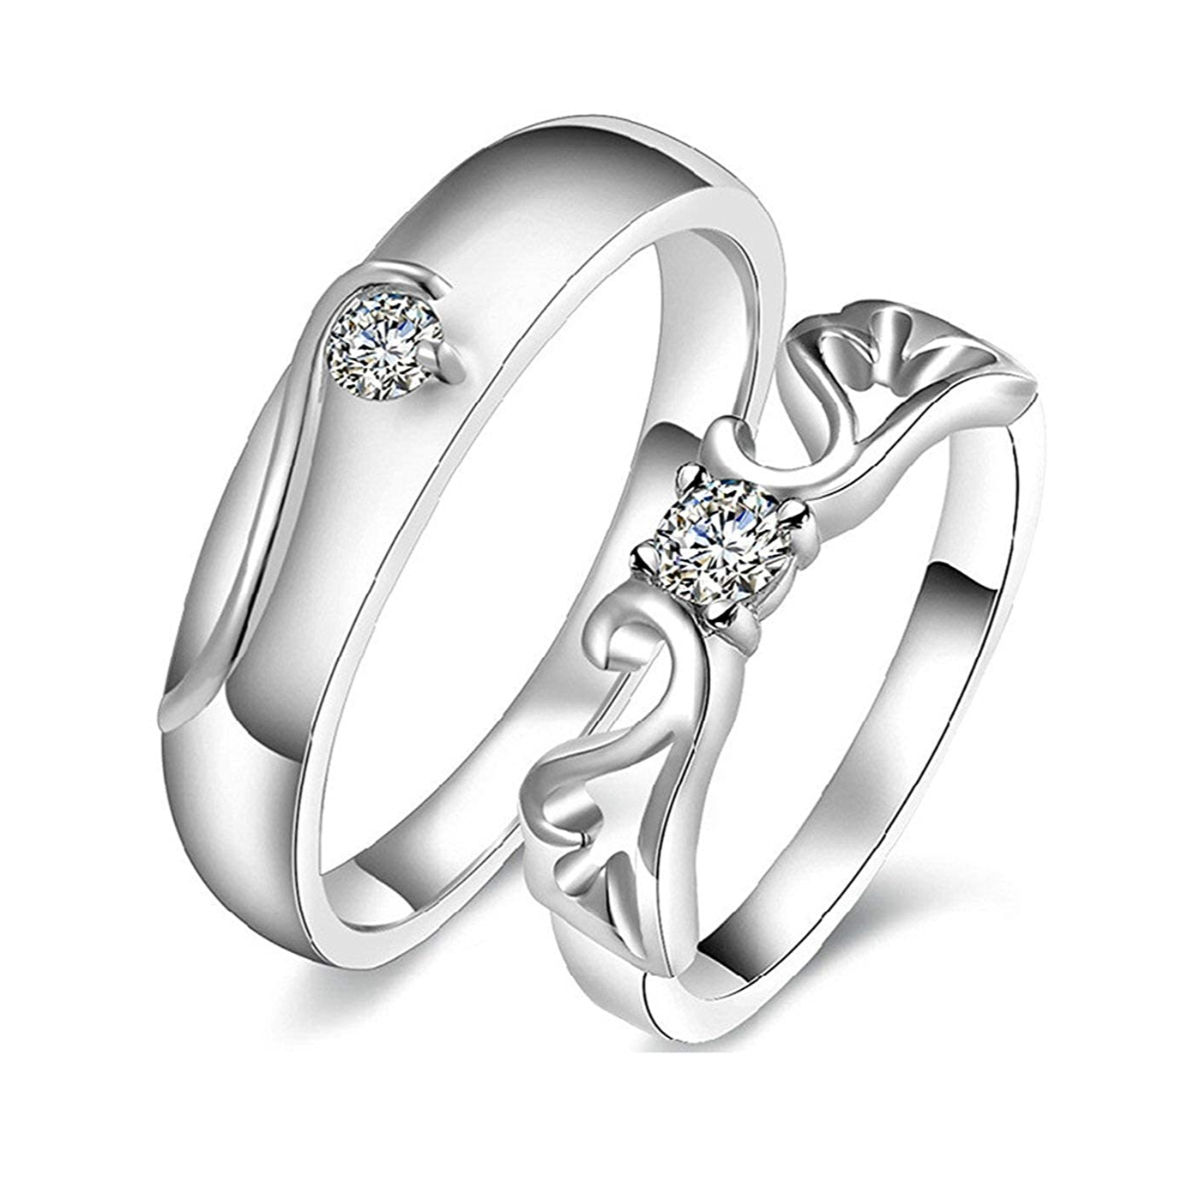 Buy Assorted Rings for Women by Karatcart Online | Ajio.com